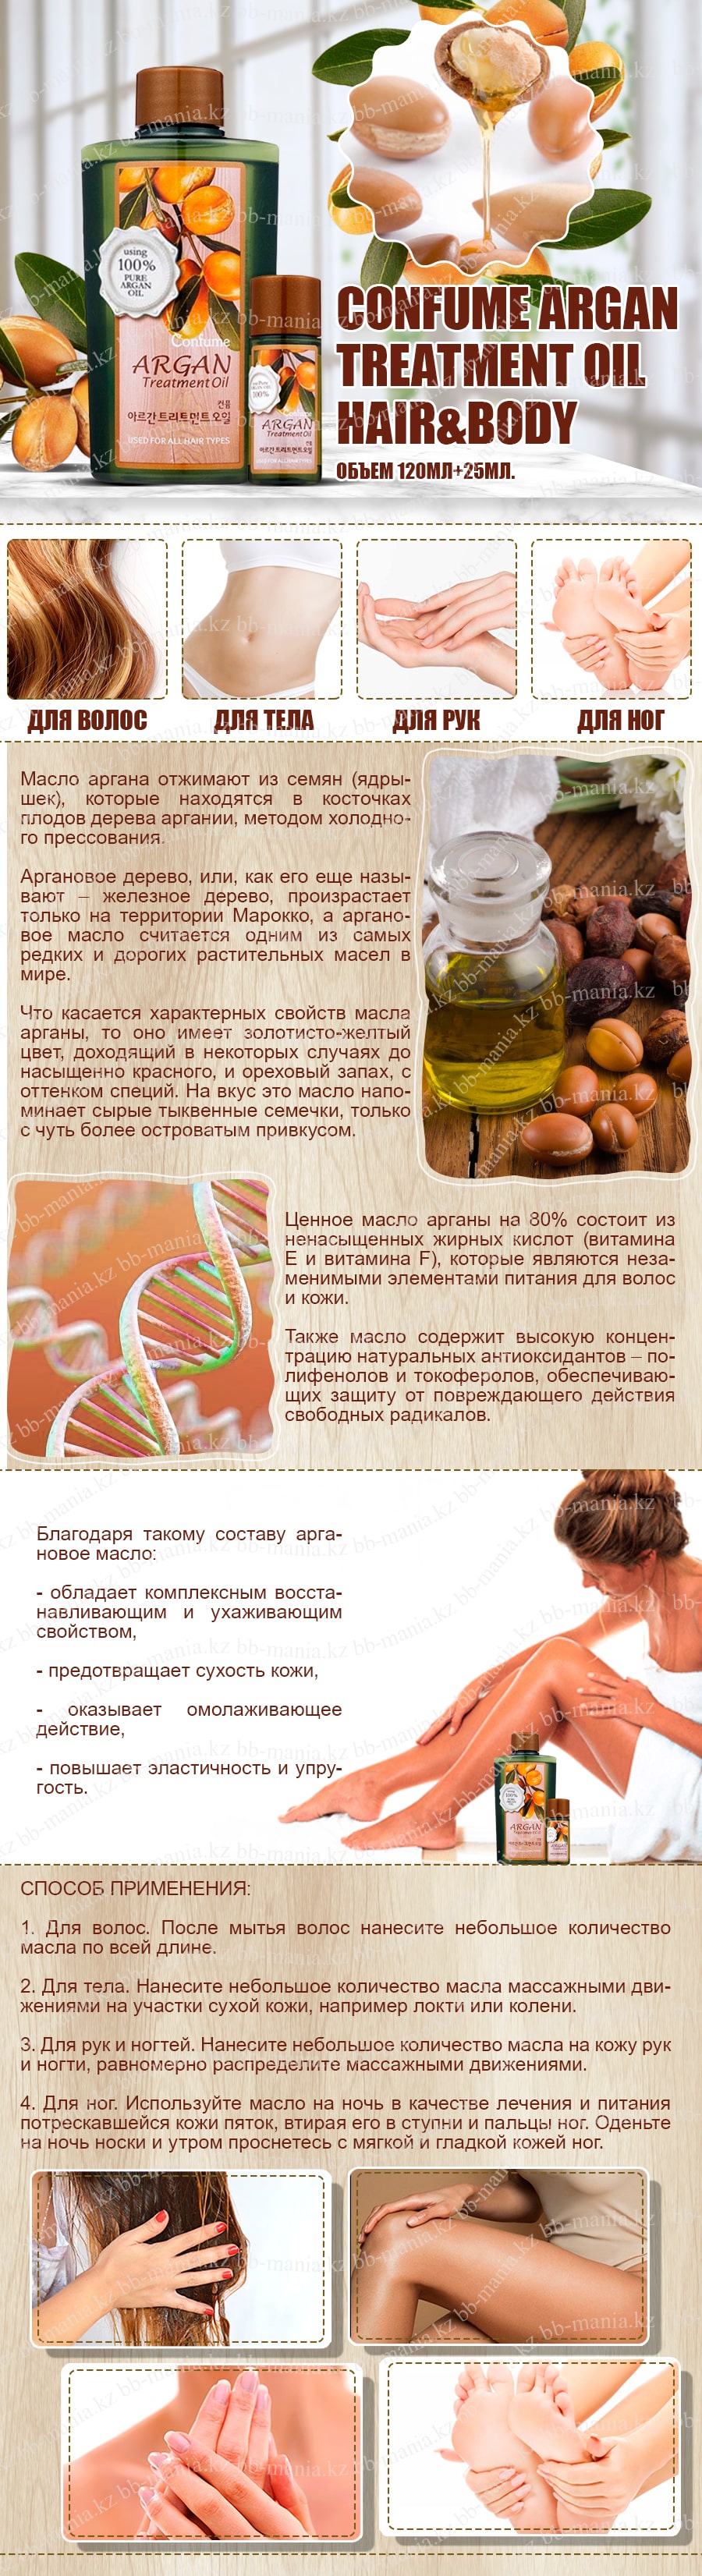 Confume-Argan-Treatment-Oil-Hair&Body-min